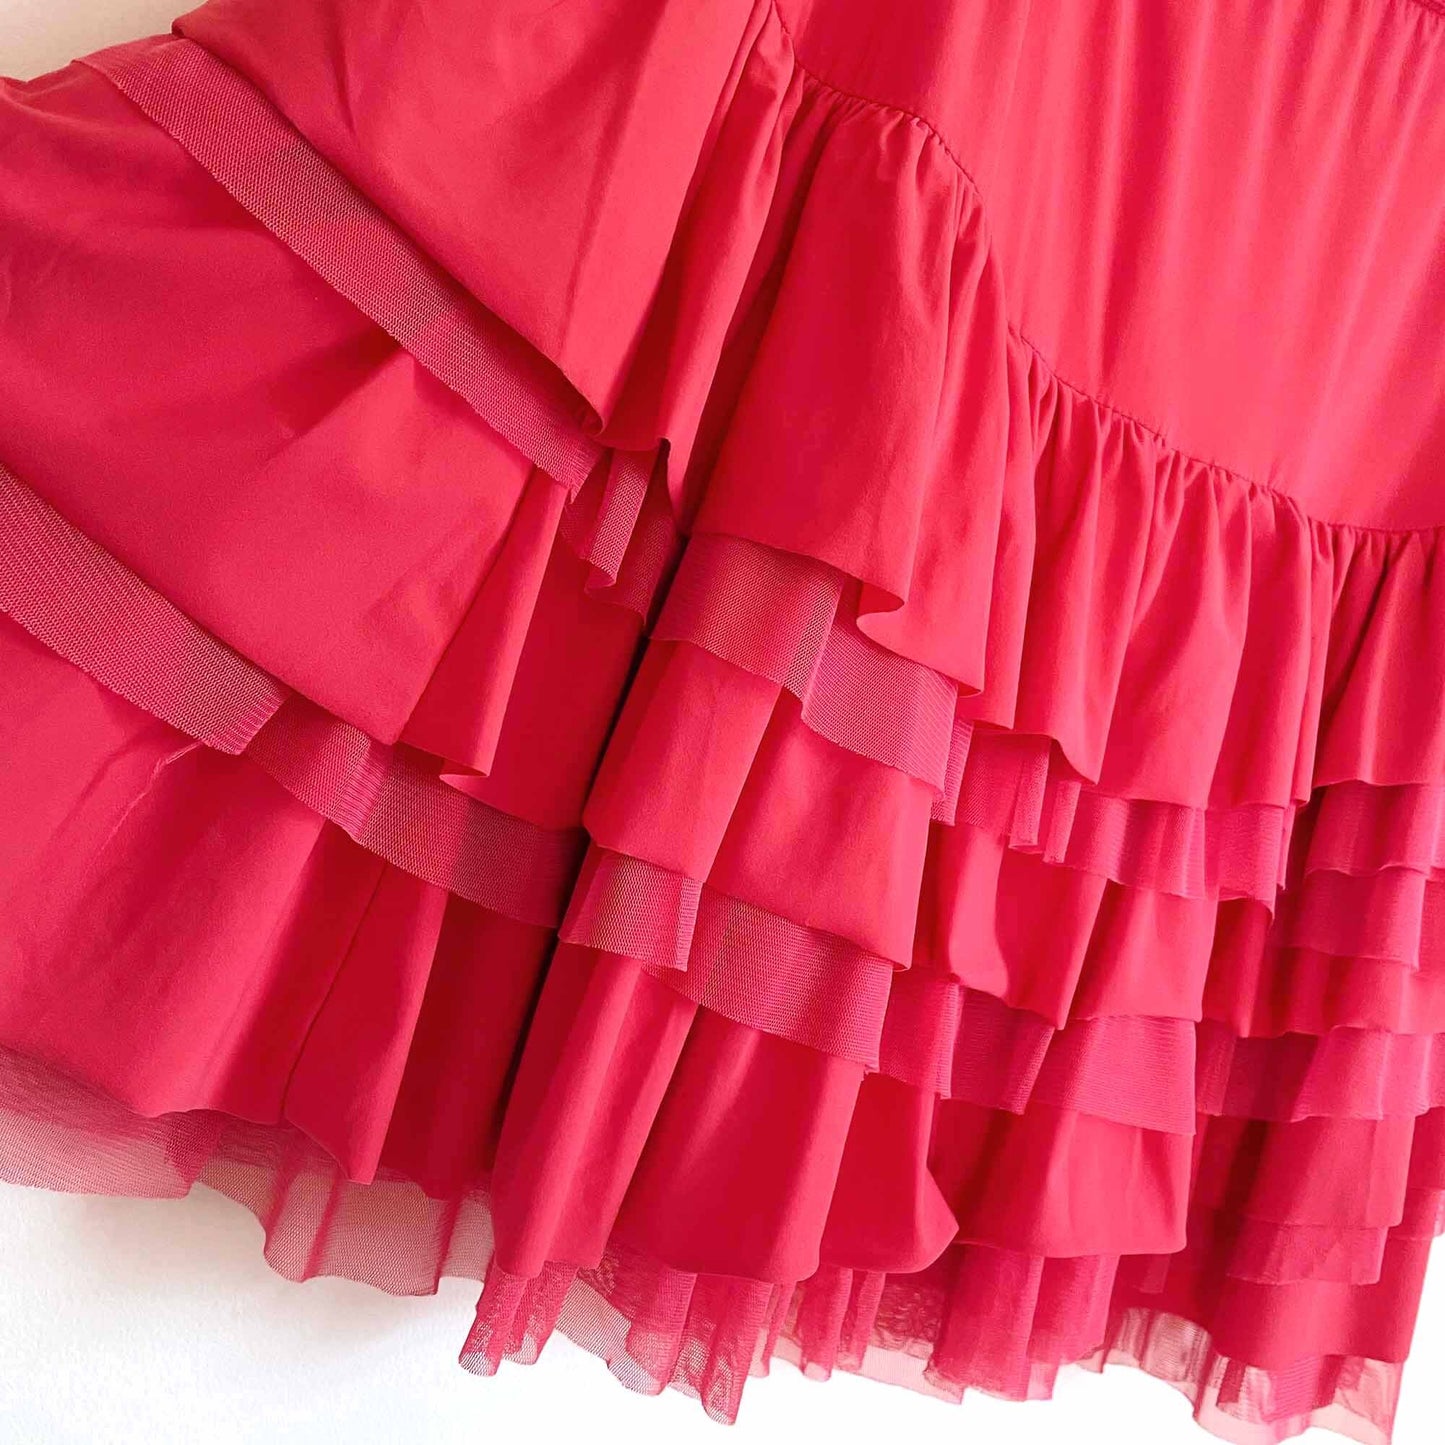 sunlight bollene high rise pink tiered ruffle mini skirt - size 2